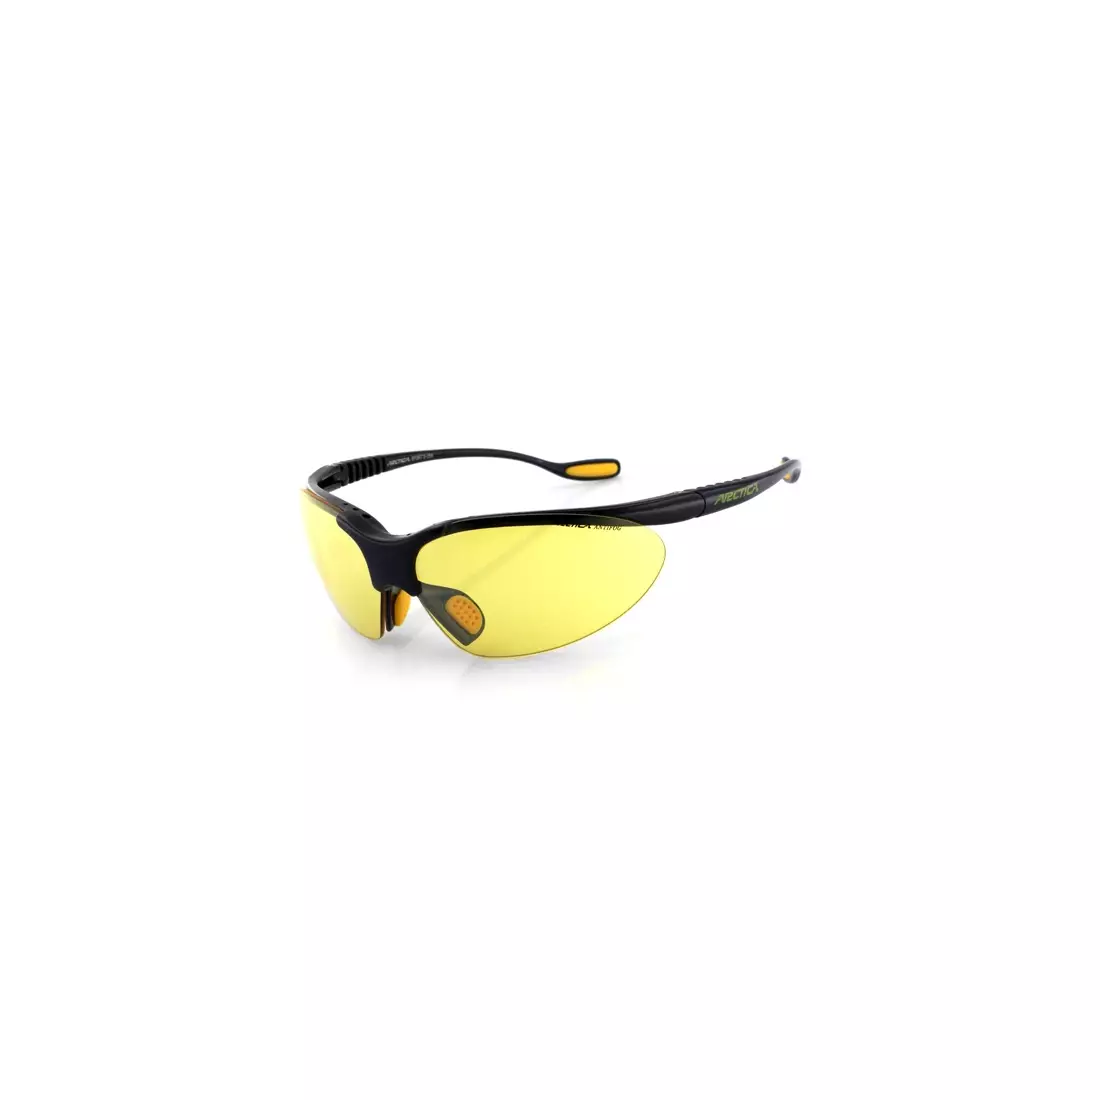 ARCTICA sports glasses S-25 A - color: Black